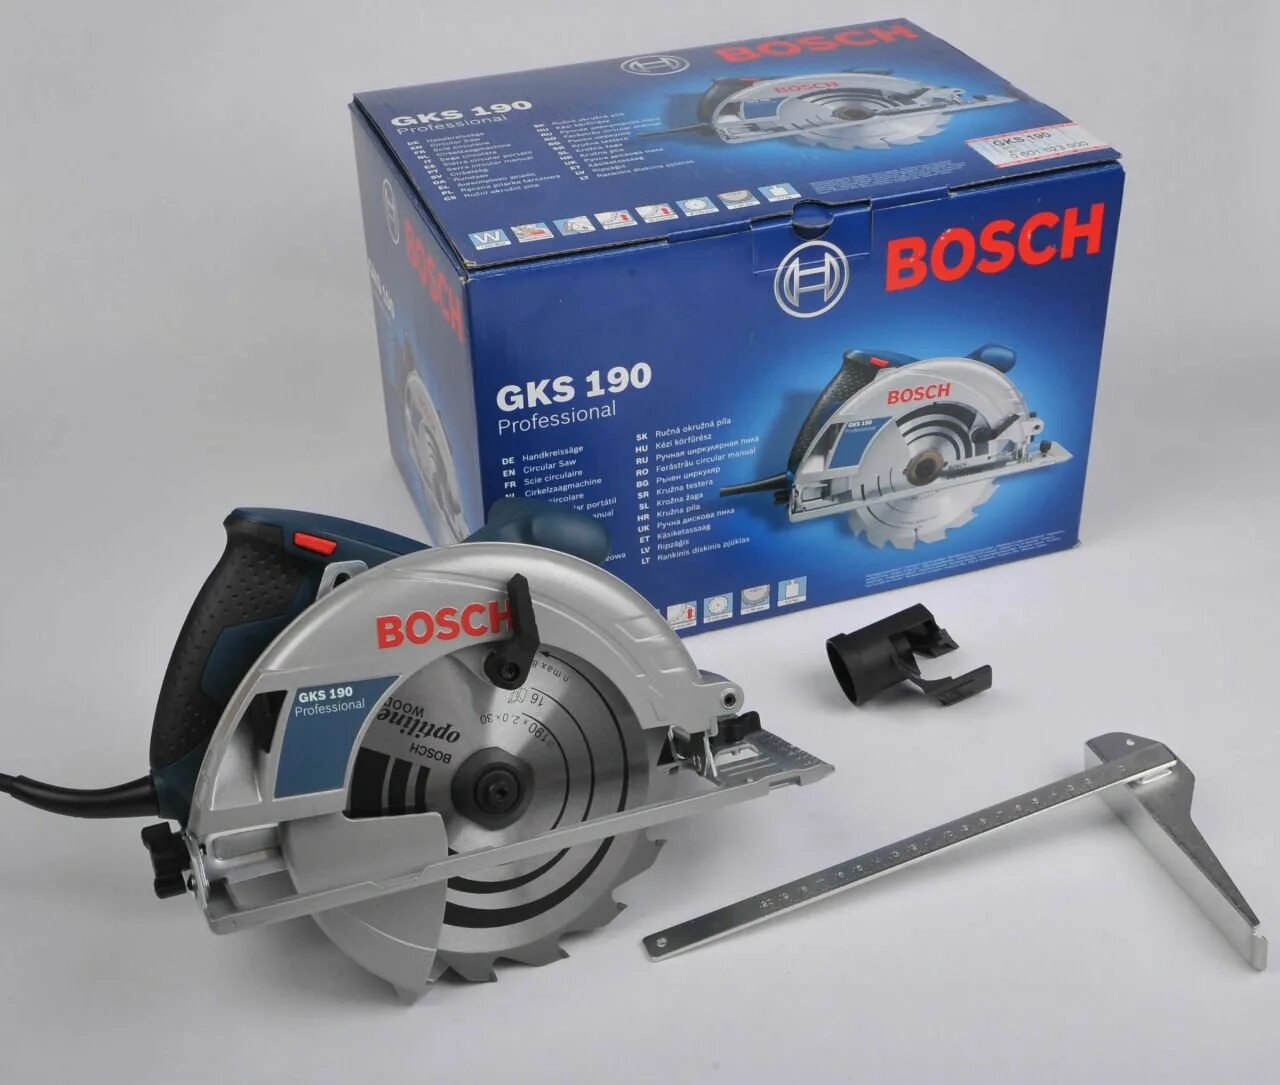 Bosch 190 купить. Bosch GKS 190. Daire Testere Bosch GKS 190. Бош кгс 190 дисковая пила. Bosch GKS 65 запчасти professional.